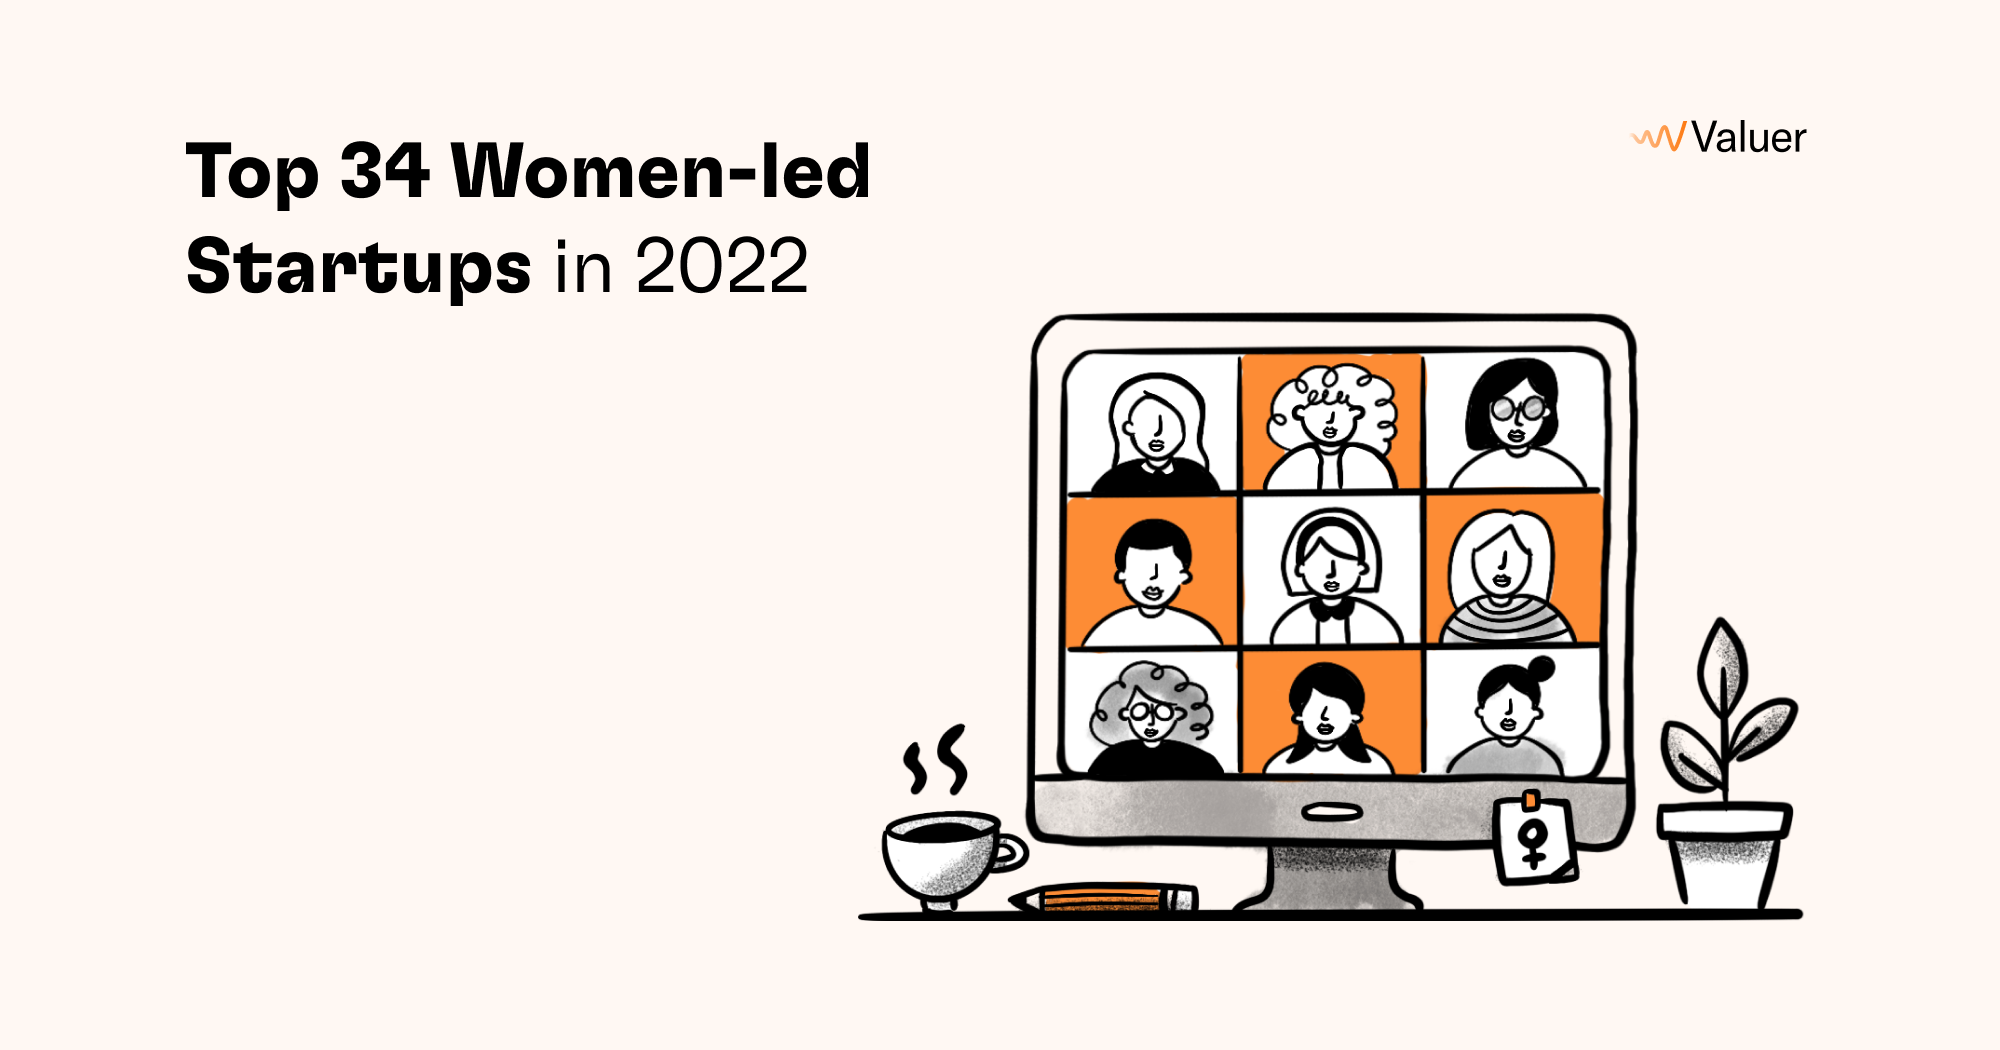 Top 34 Women-led Startups in 2022